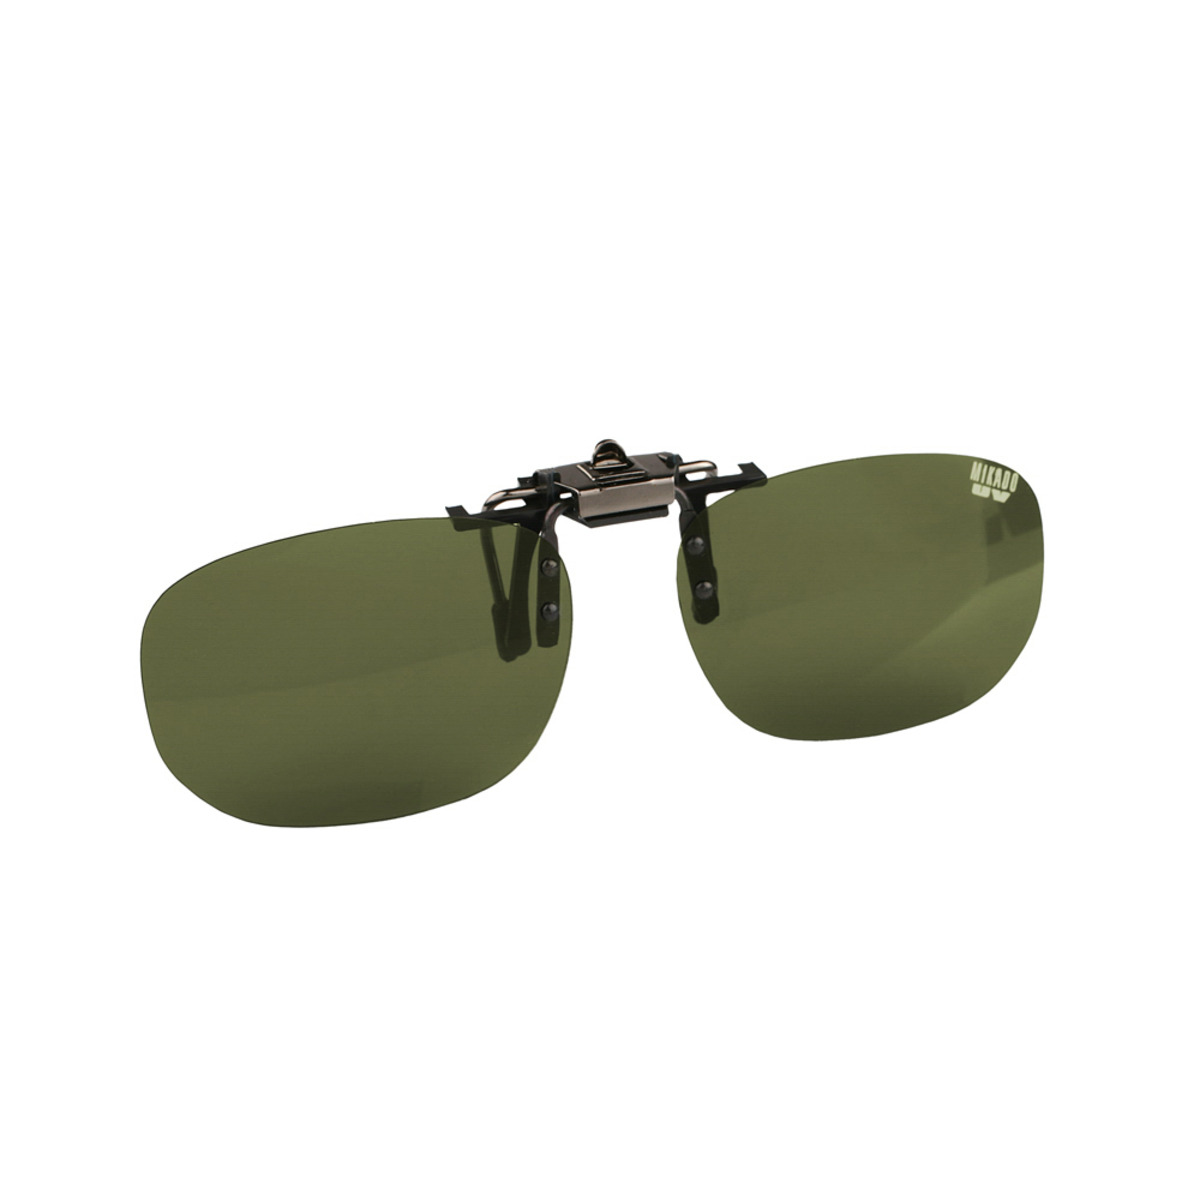 Mikado Sunglasses Polarized Cap C Pon - GREEN